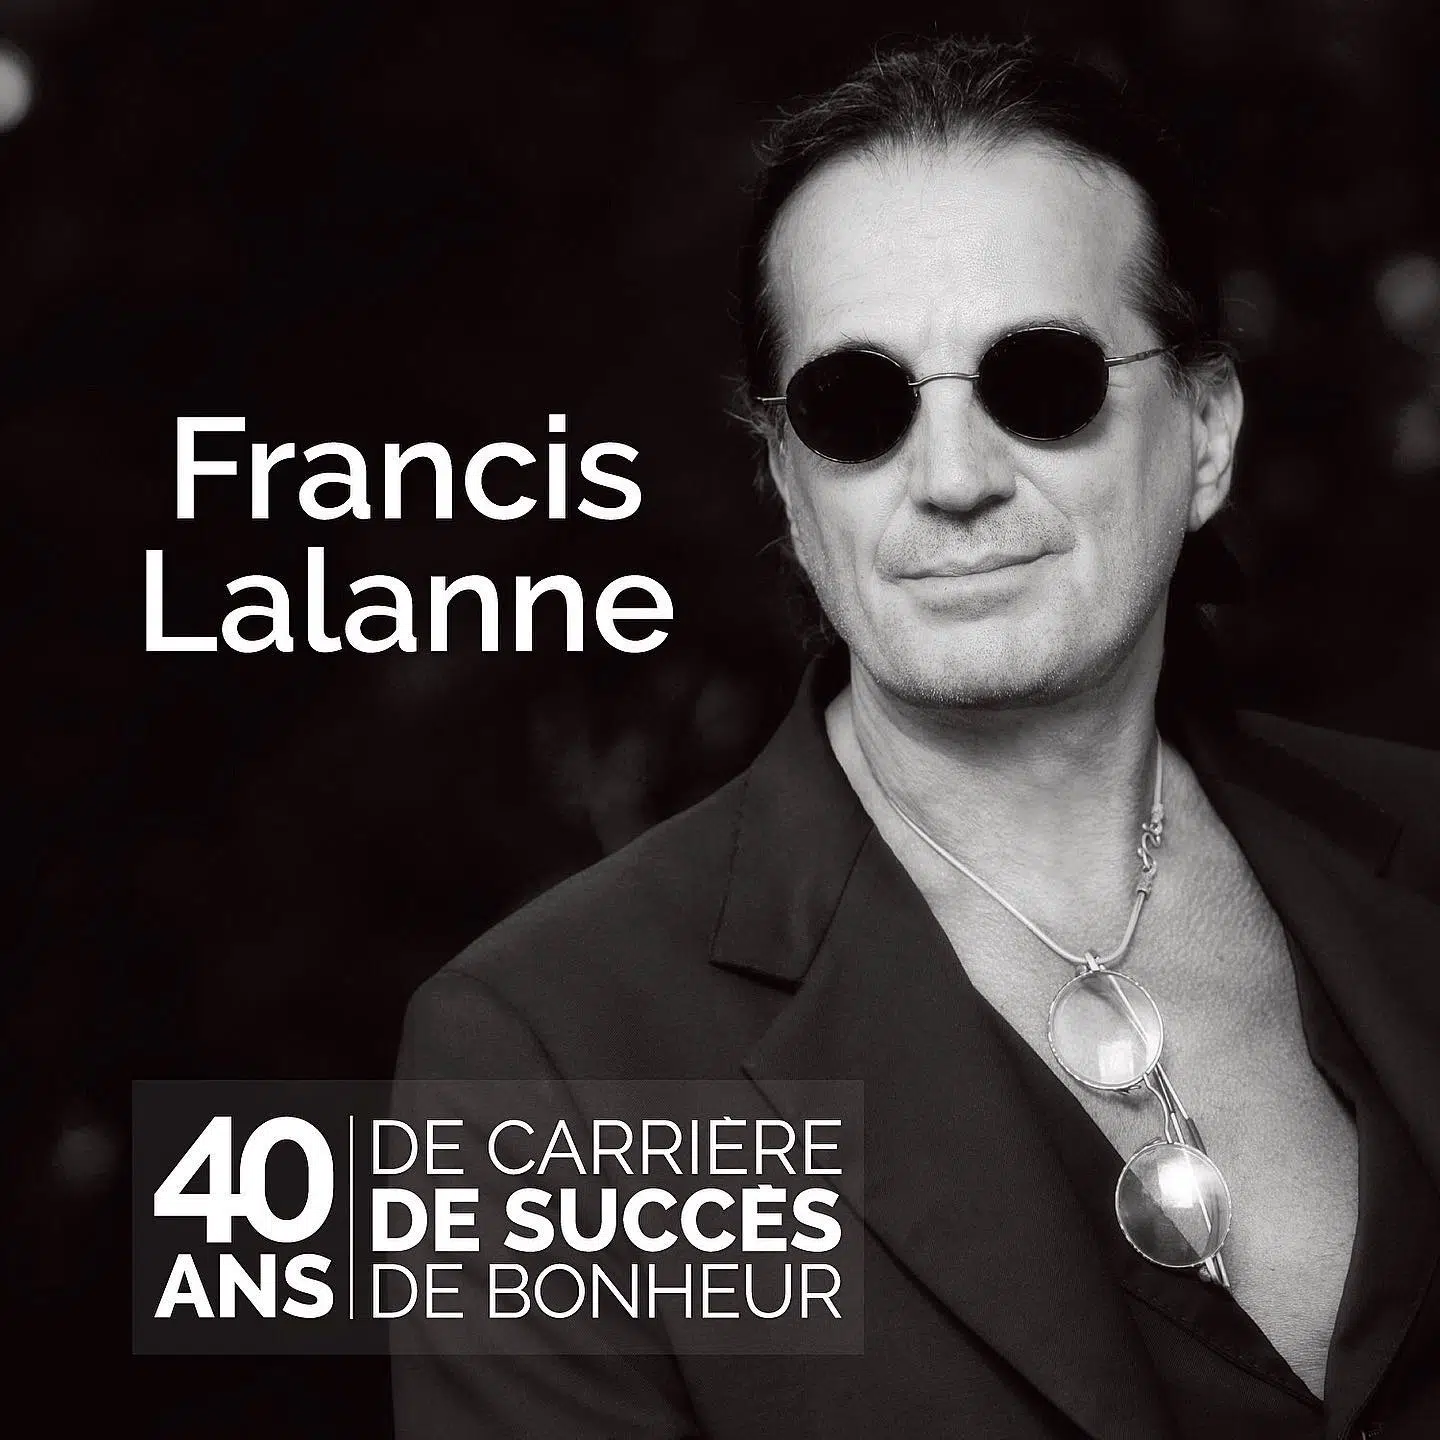 Francis Lalanne